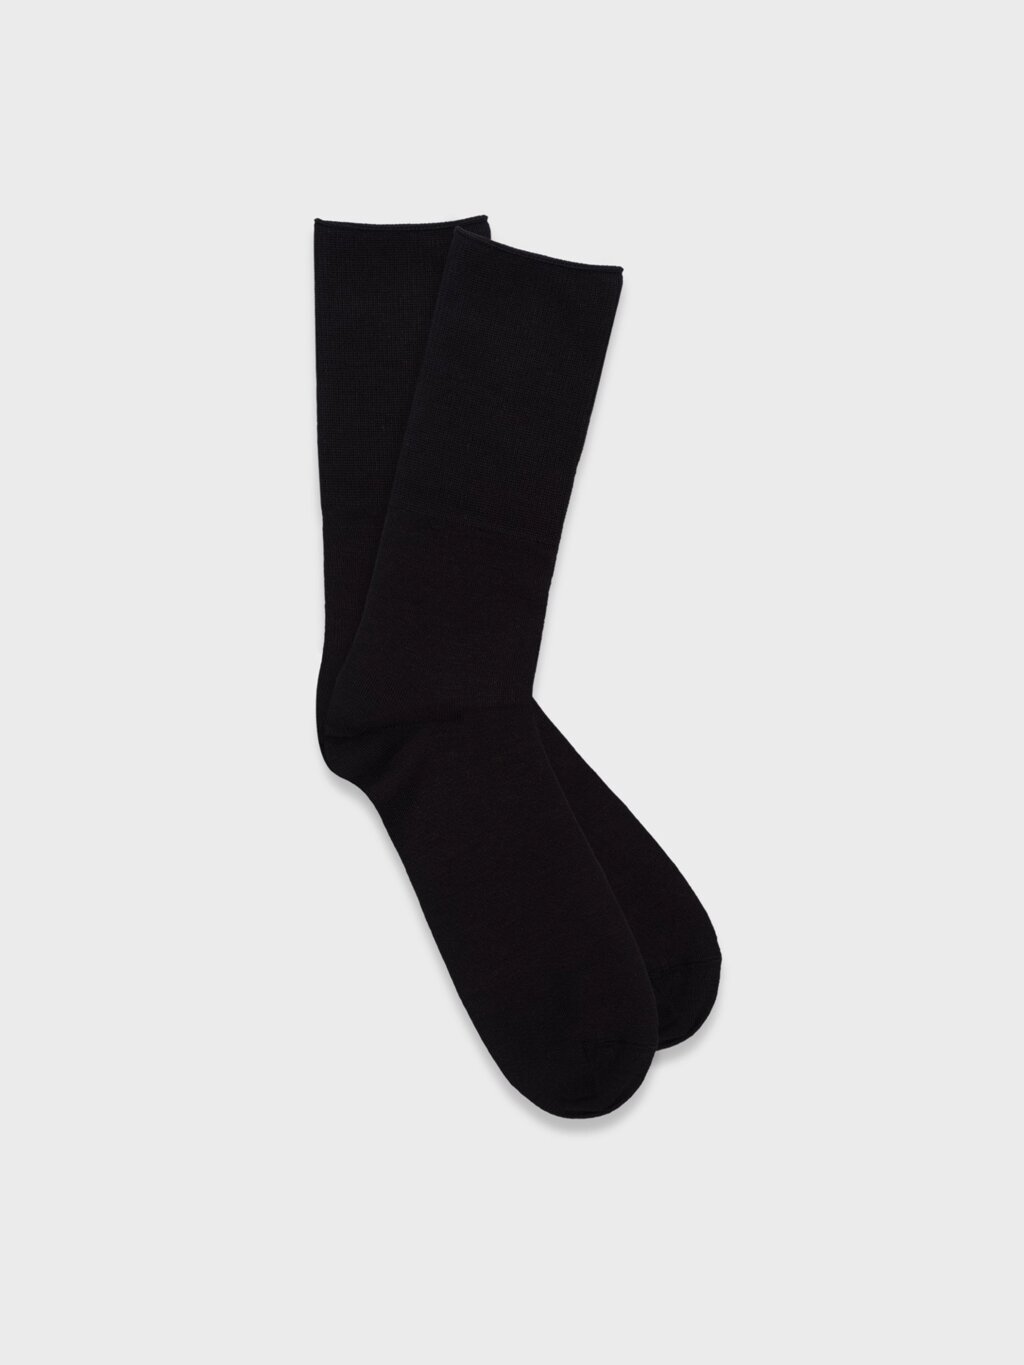 Базовые женские носки (38-40) от компании Admi - фото 1